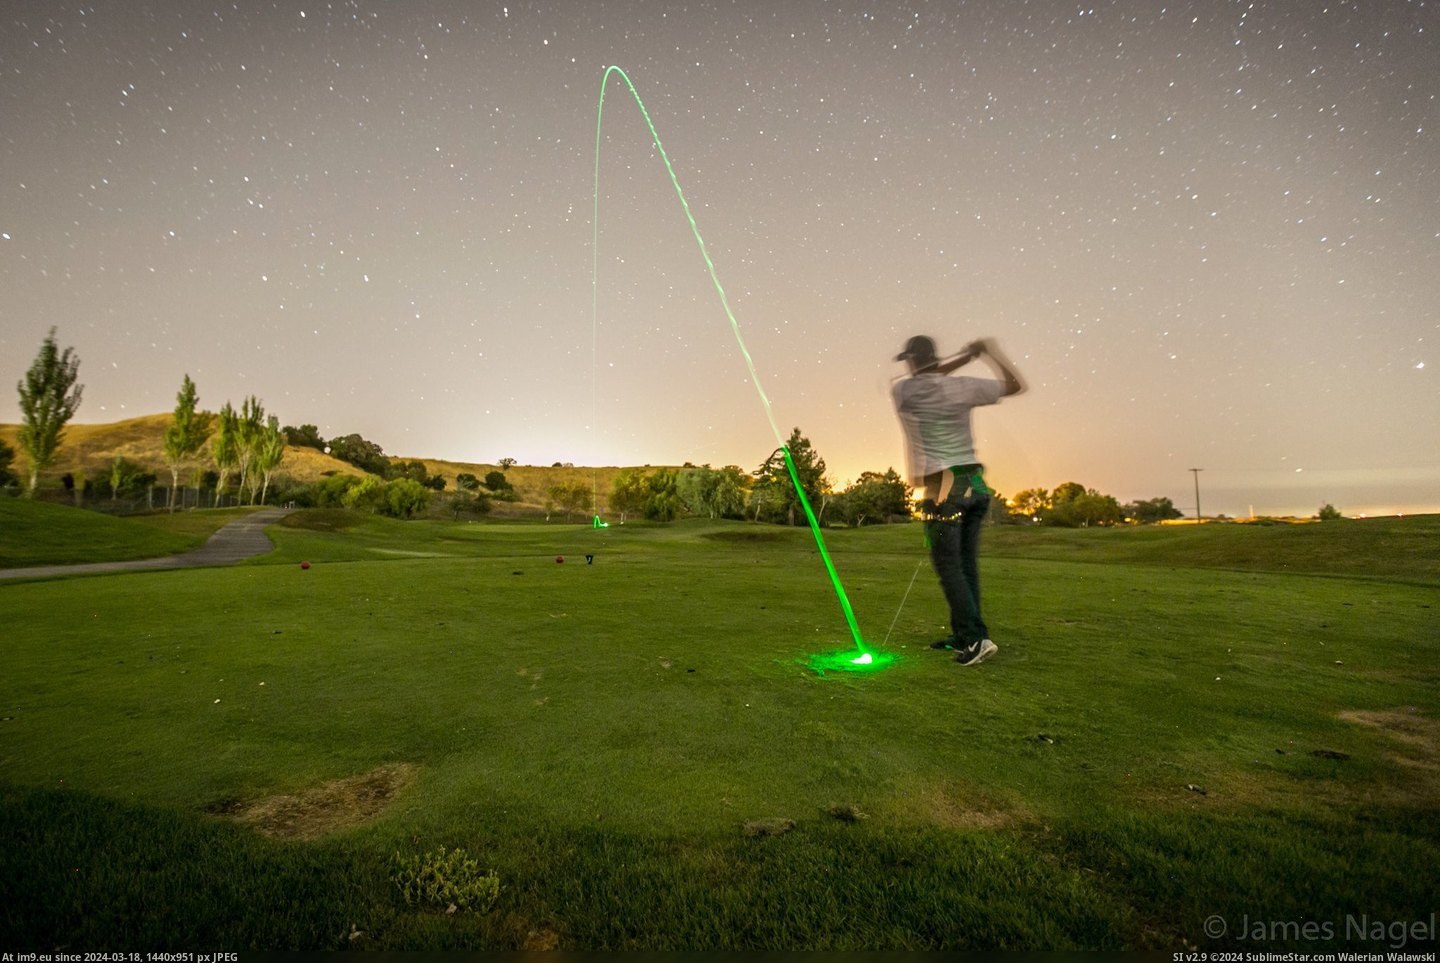 #Shot #Long #Golf #Illuminated #Ball #Exposure [Pics] Long exposure of an illuminated golf ball shot Pic. (Image of album My r/PICS favs))